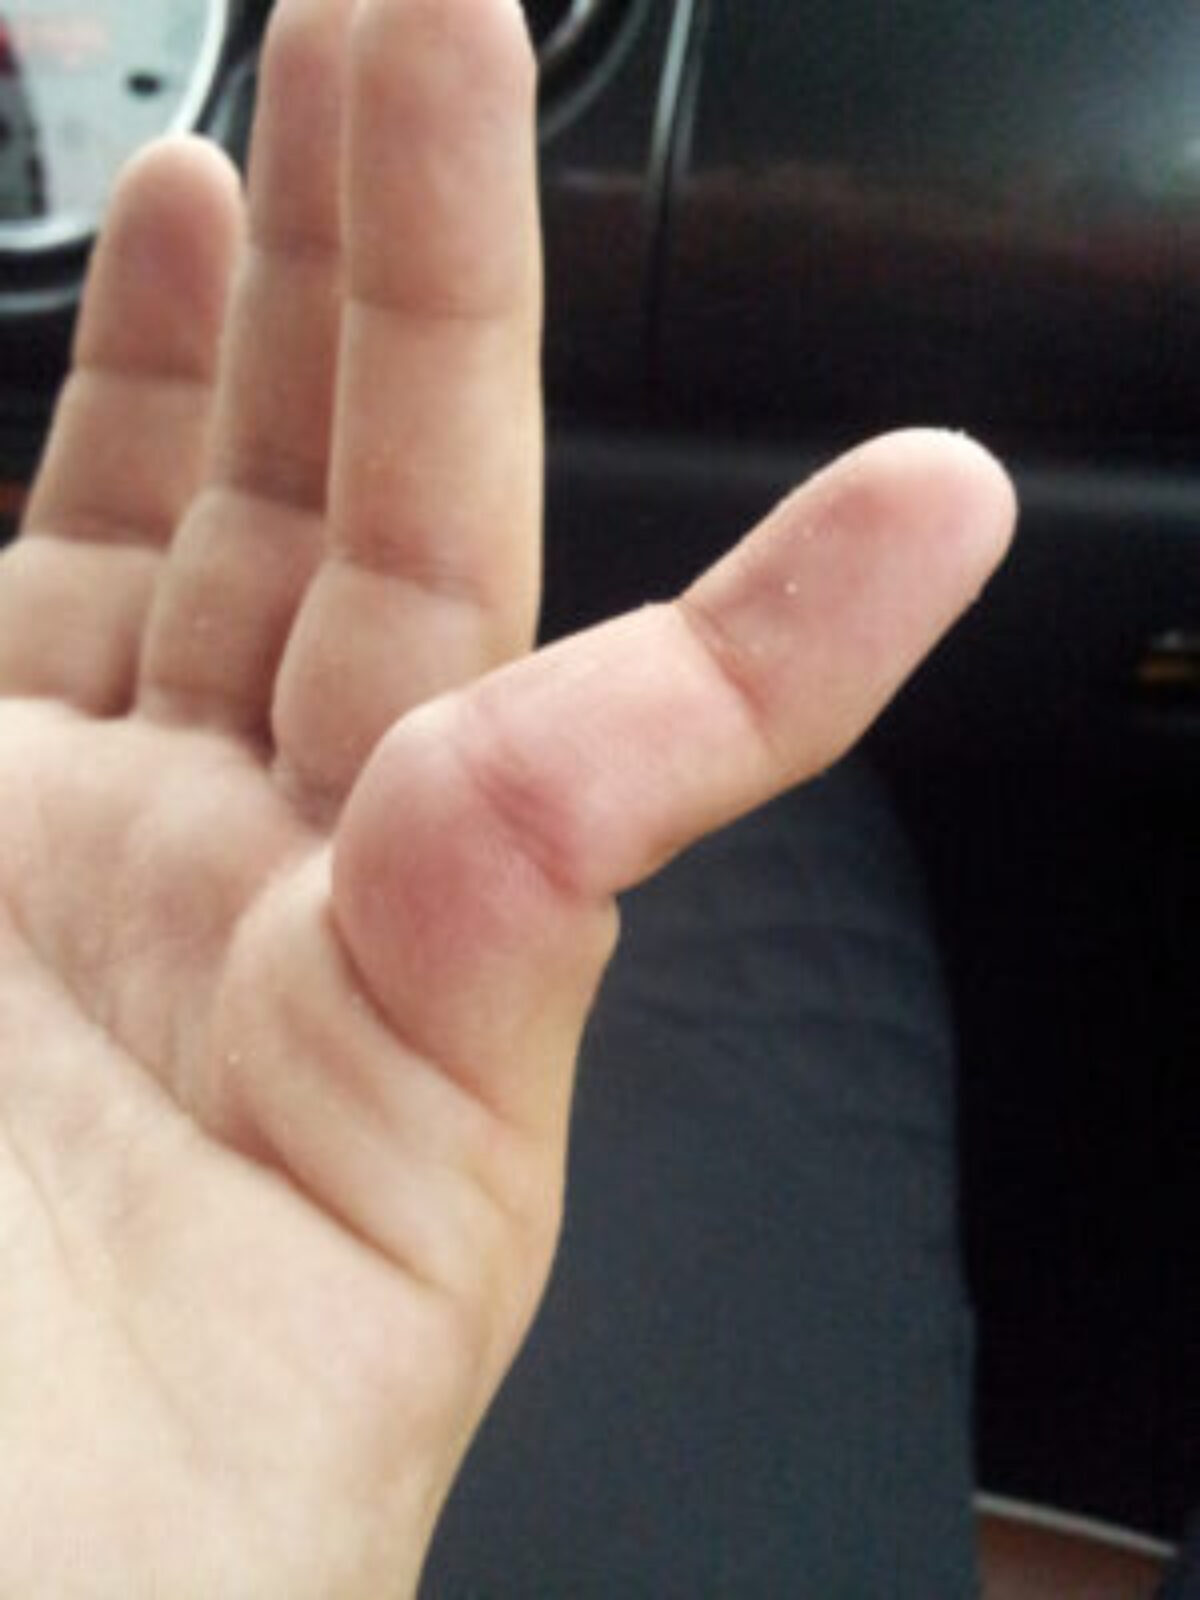 How to treat a purple swollen finger - Quora